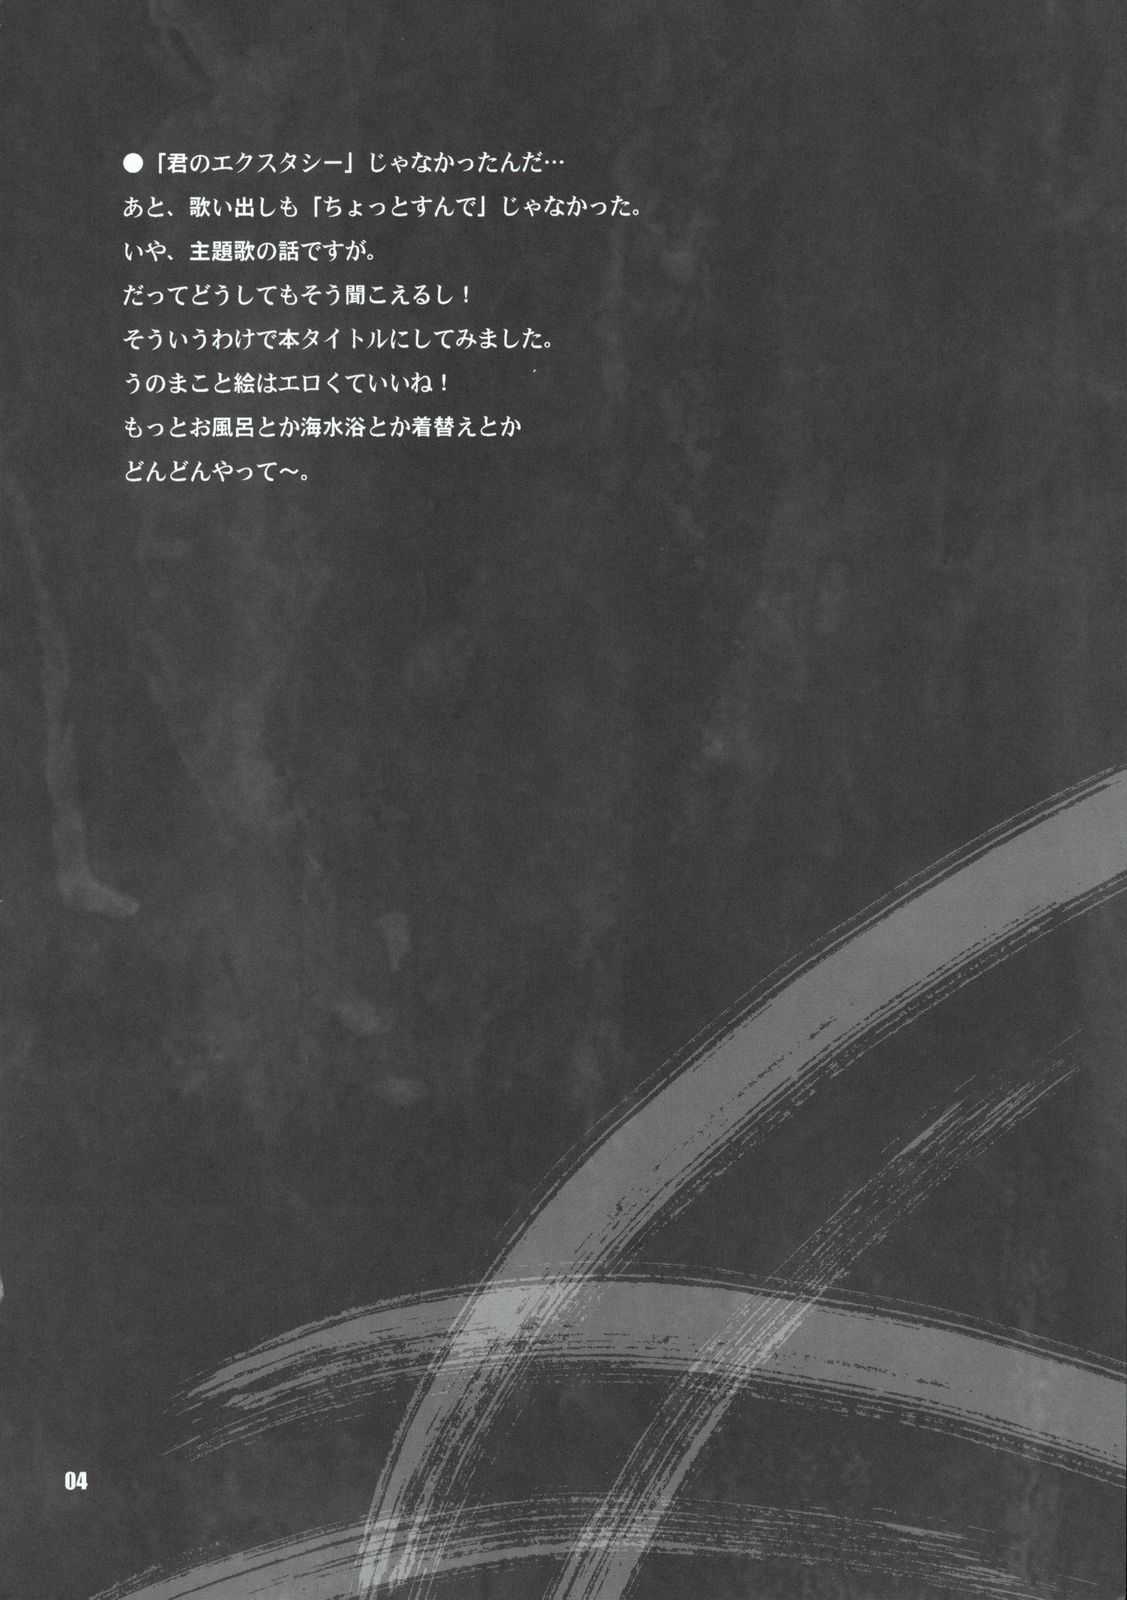 [Charlotte koko] Yukiyanagi book 12 your ecstasy (Witchblade) 